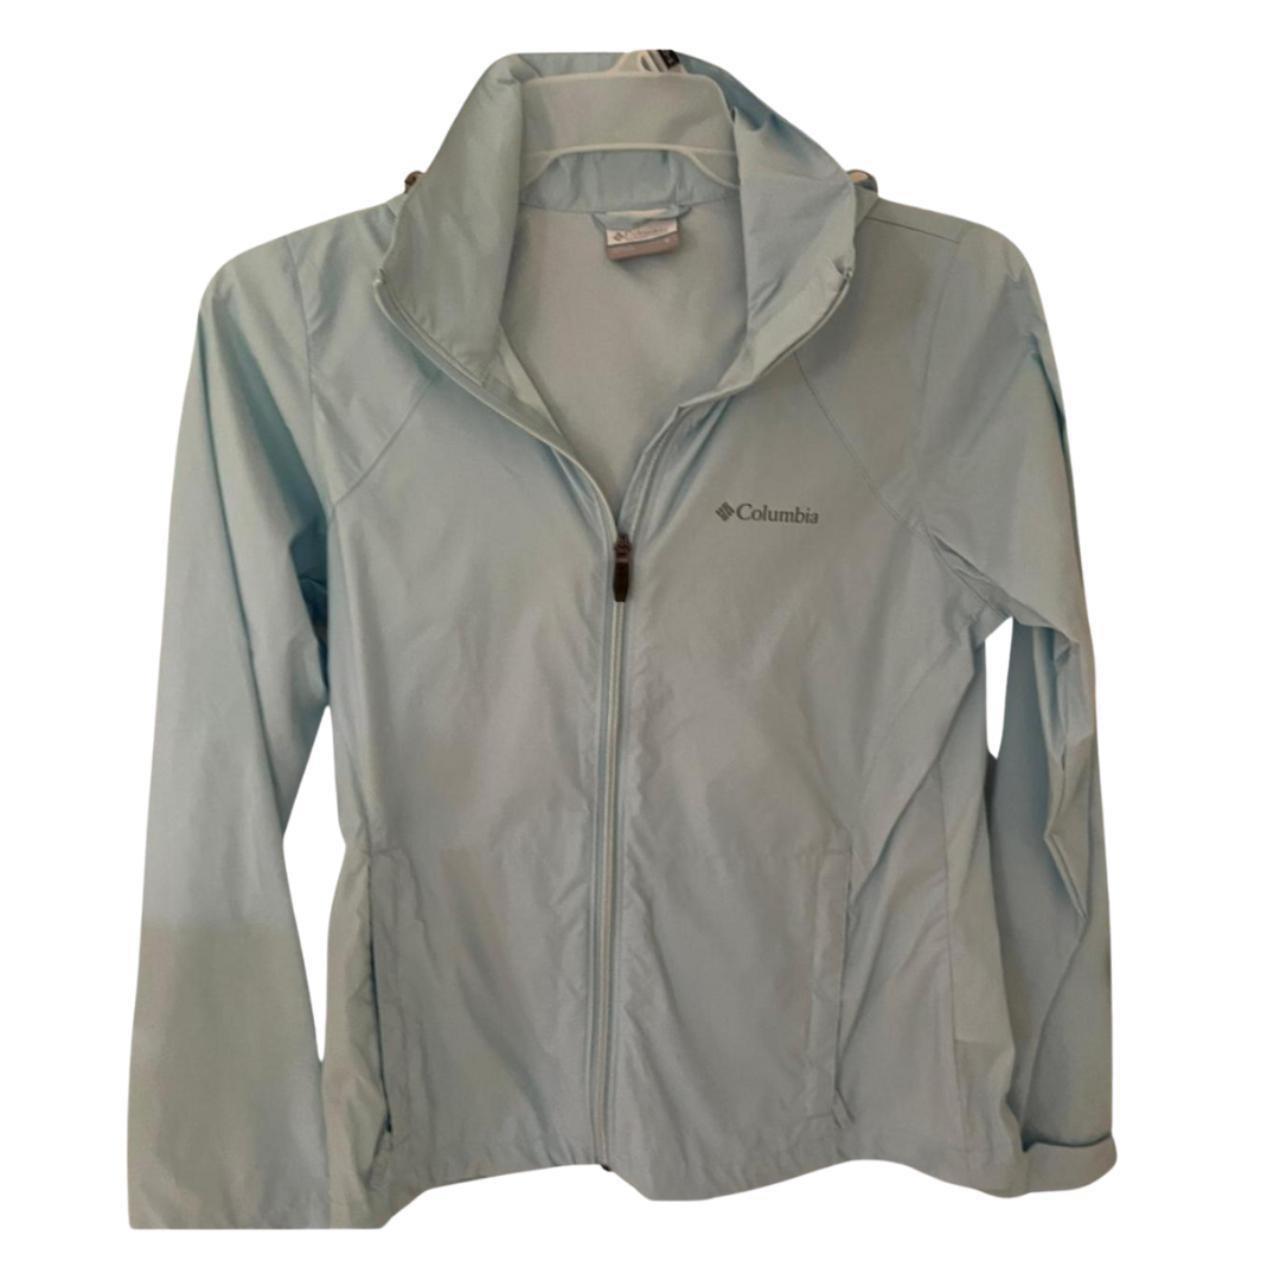 Womens Medium Columbia Sportswear Rain Jacket Wind Breaker Light